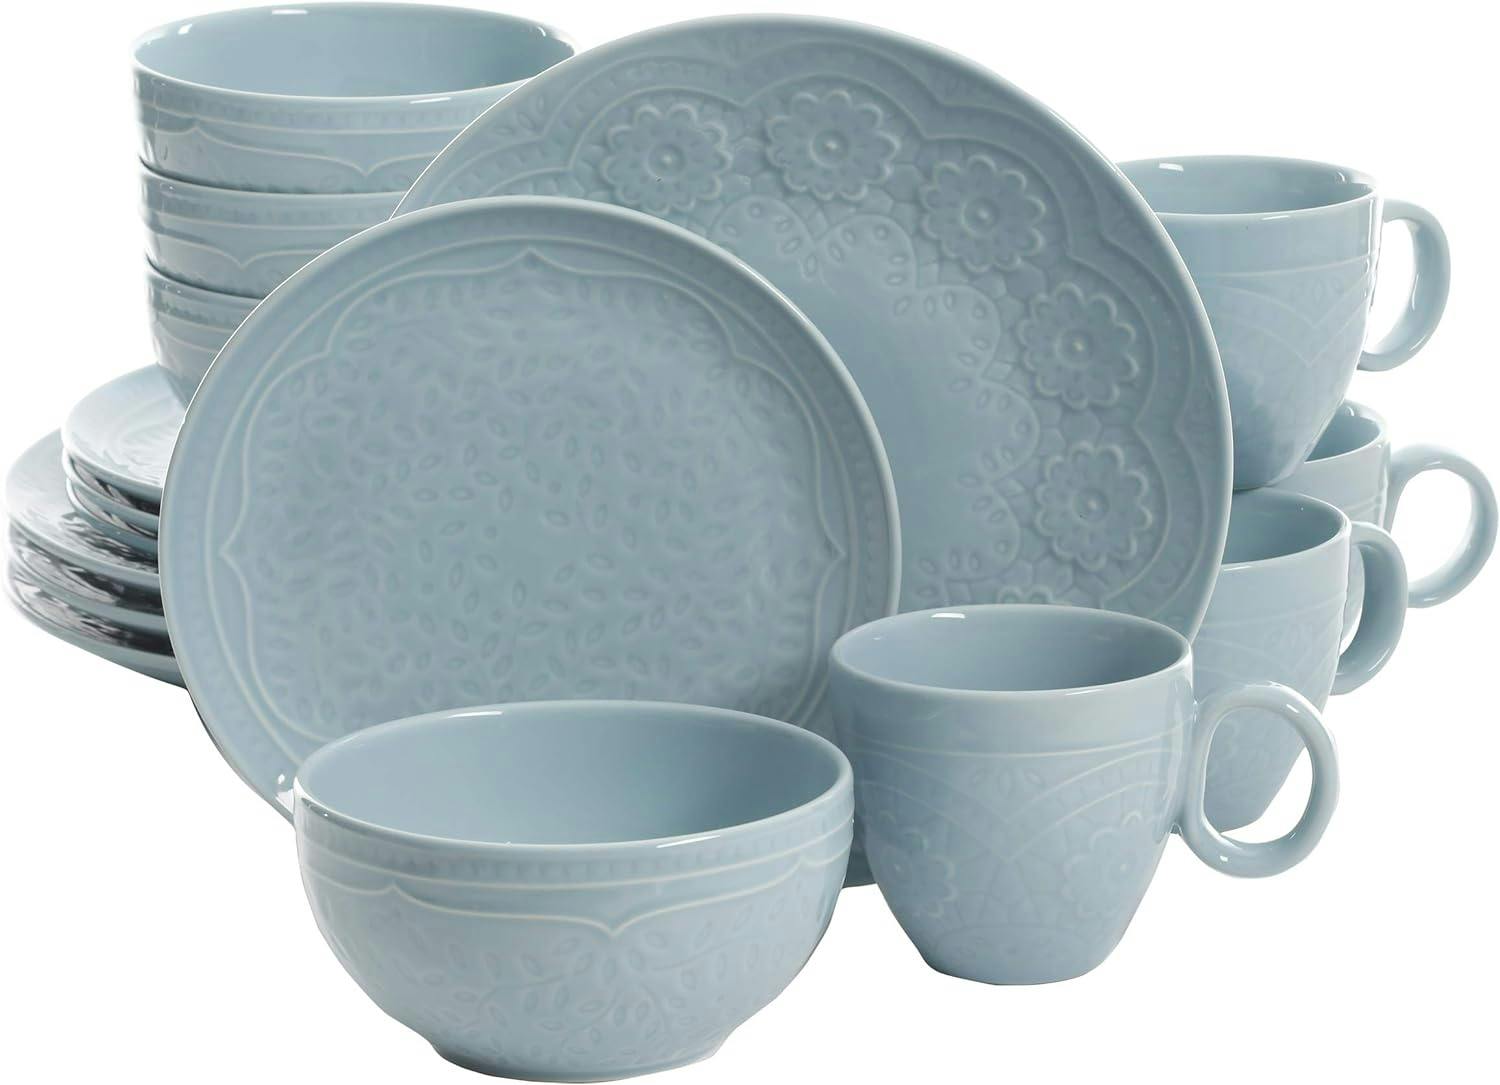 Aqua Floral Porcelain 16-Piece Dinnerware Set for 4